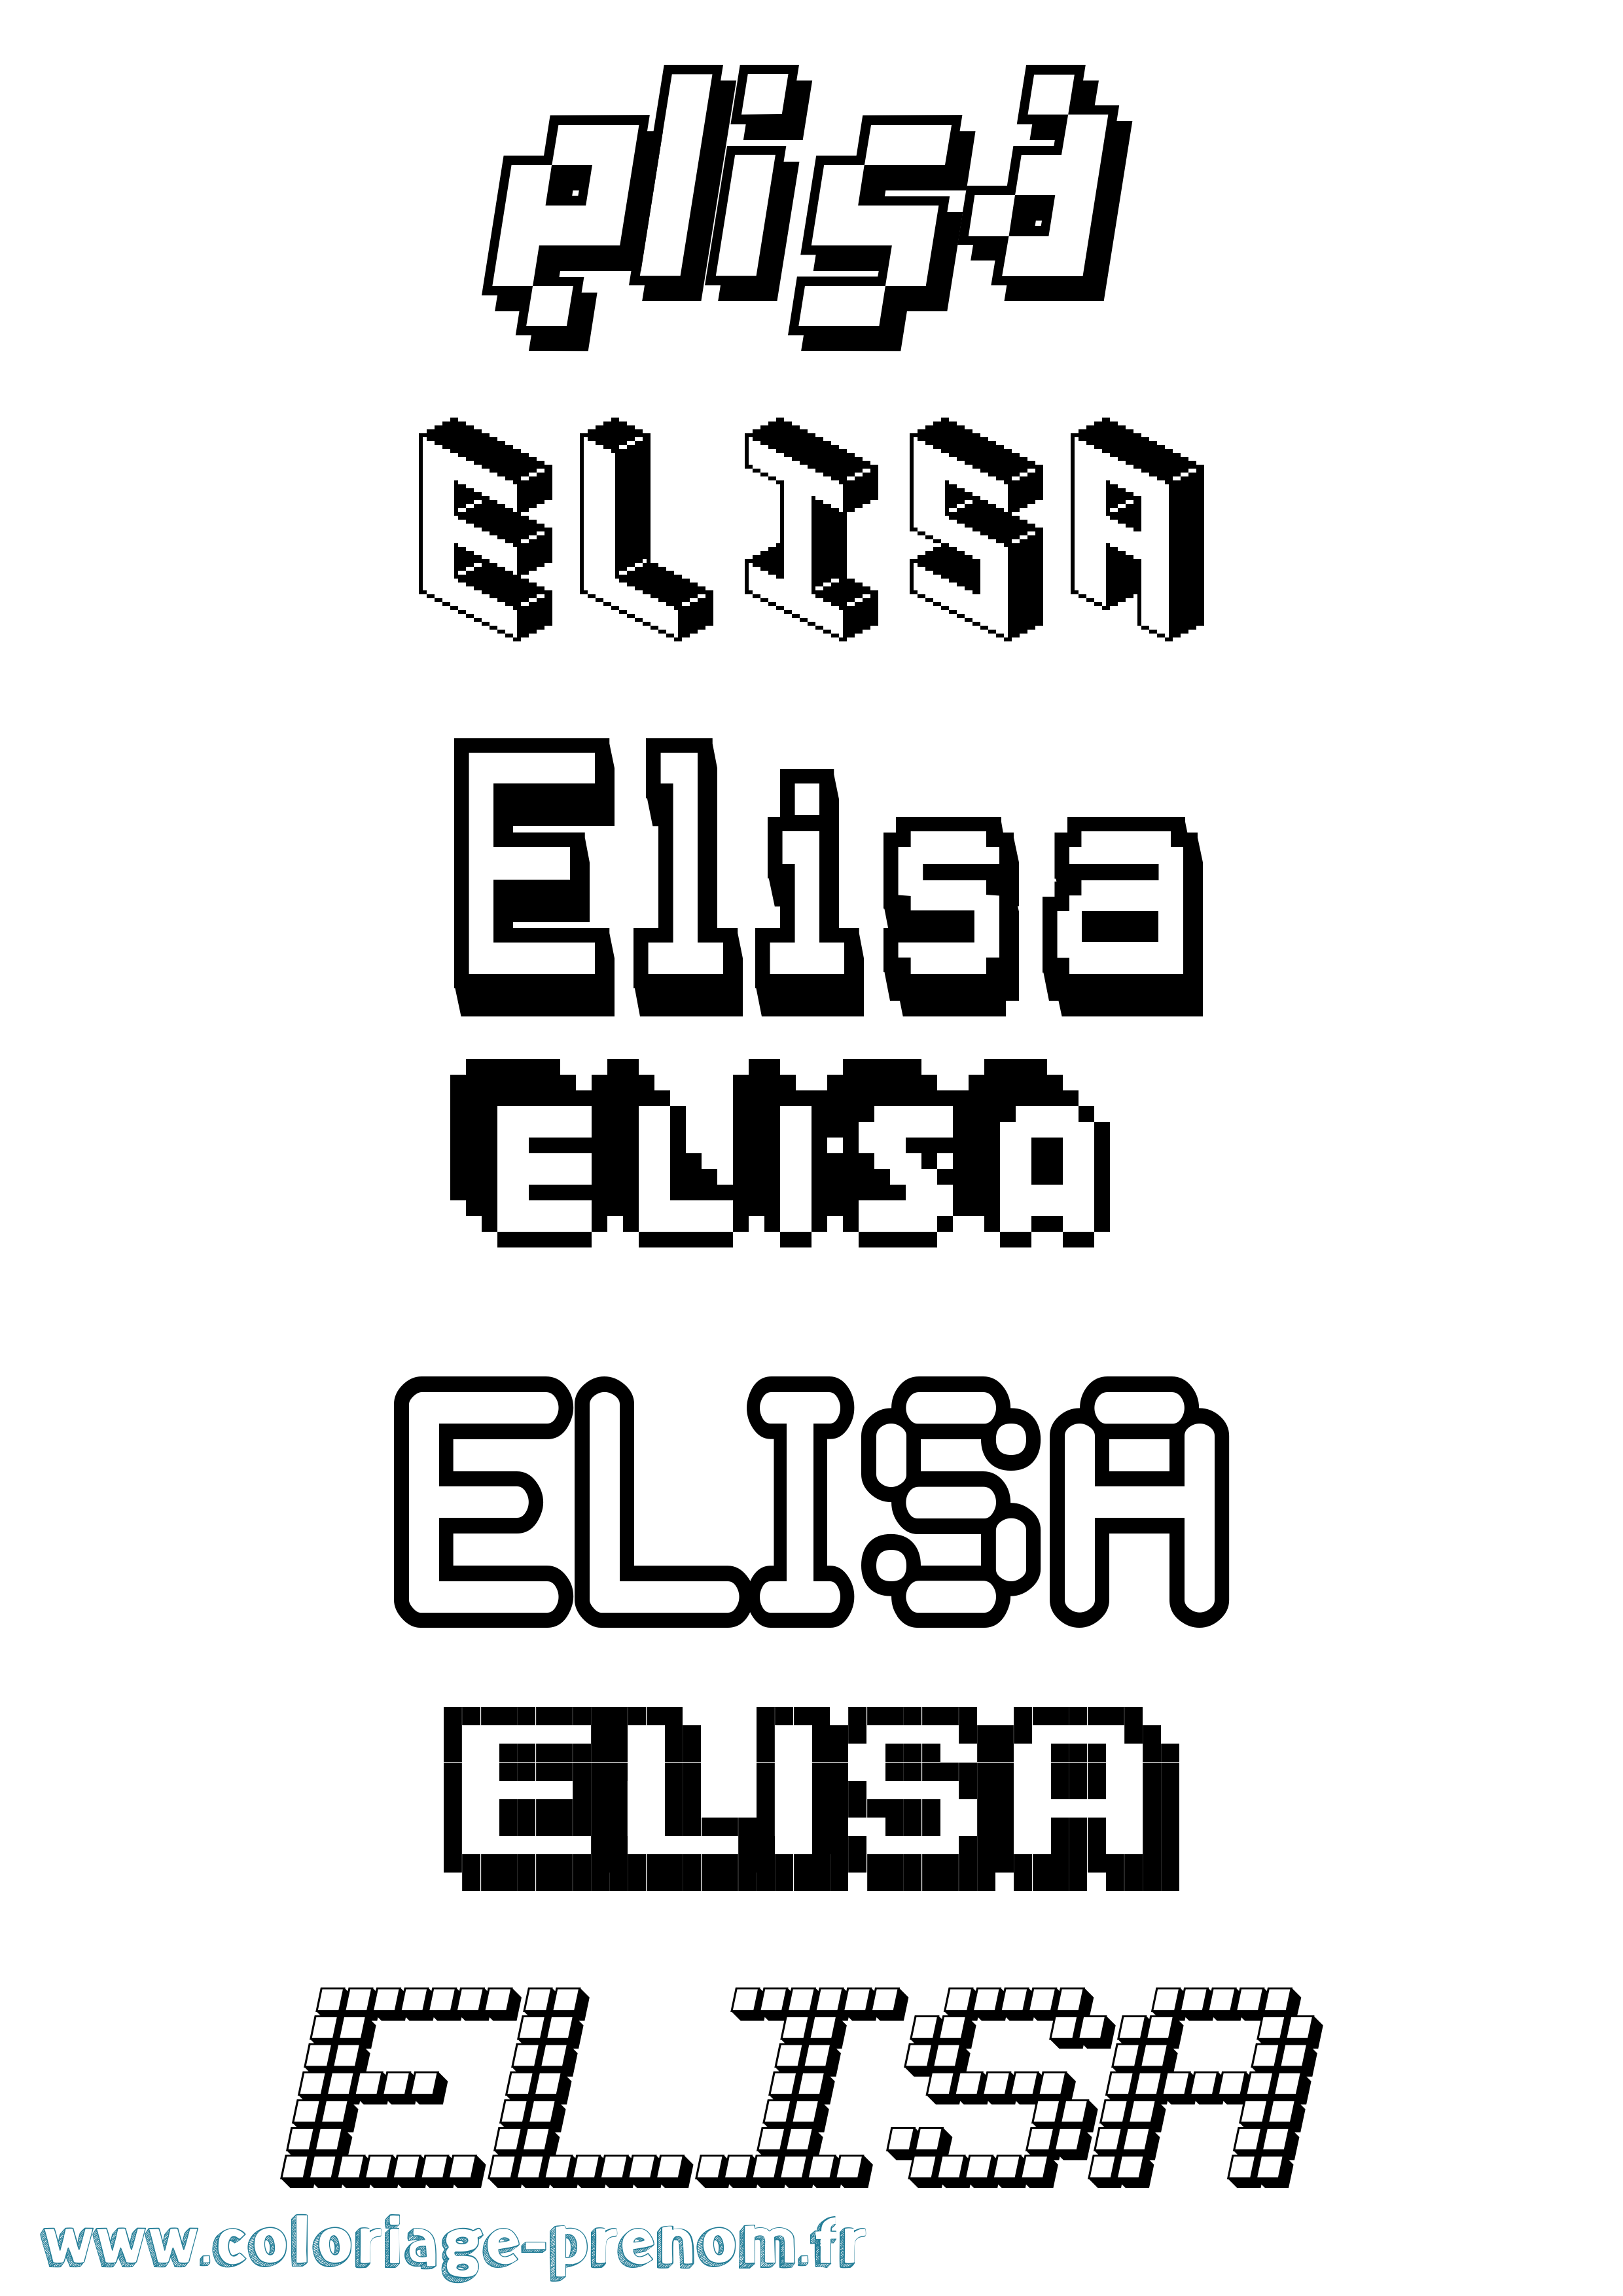 Coloriage prénom Elisa Pixel